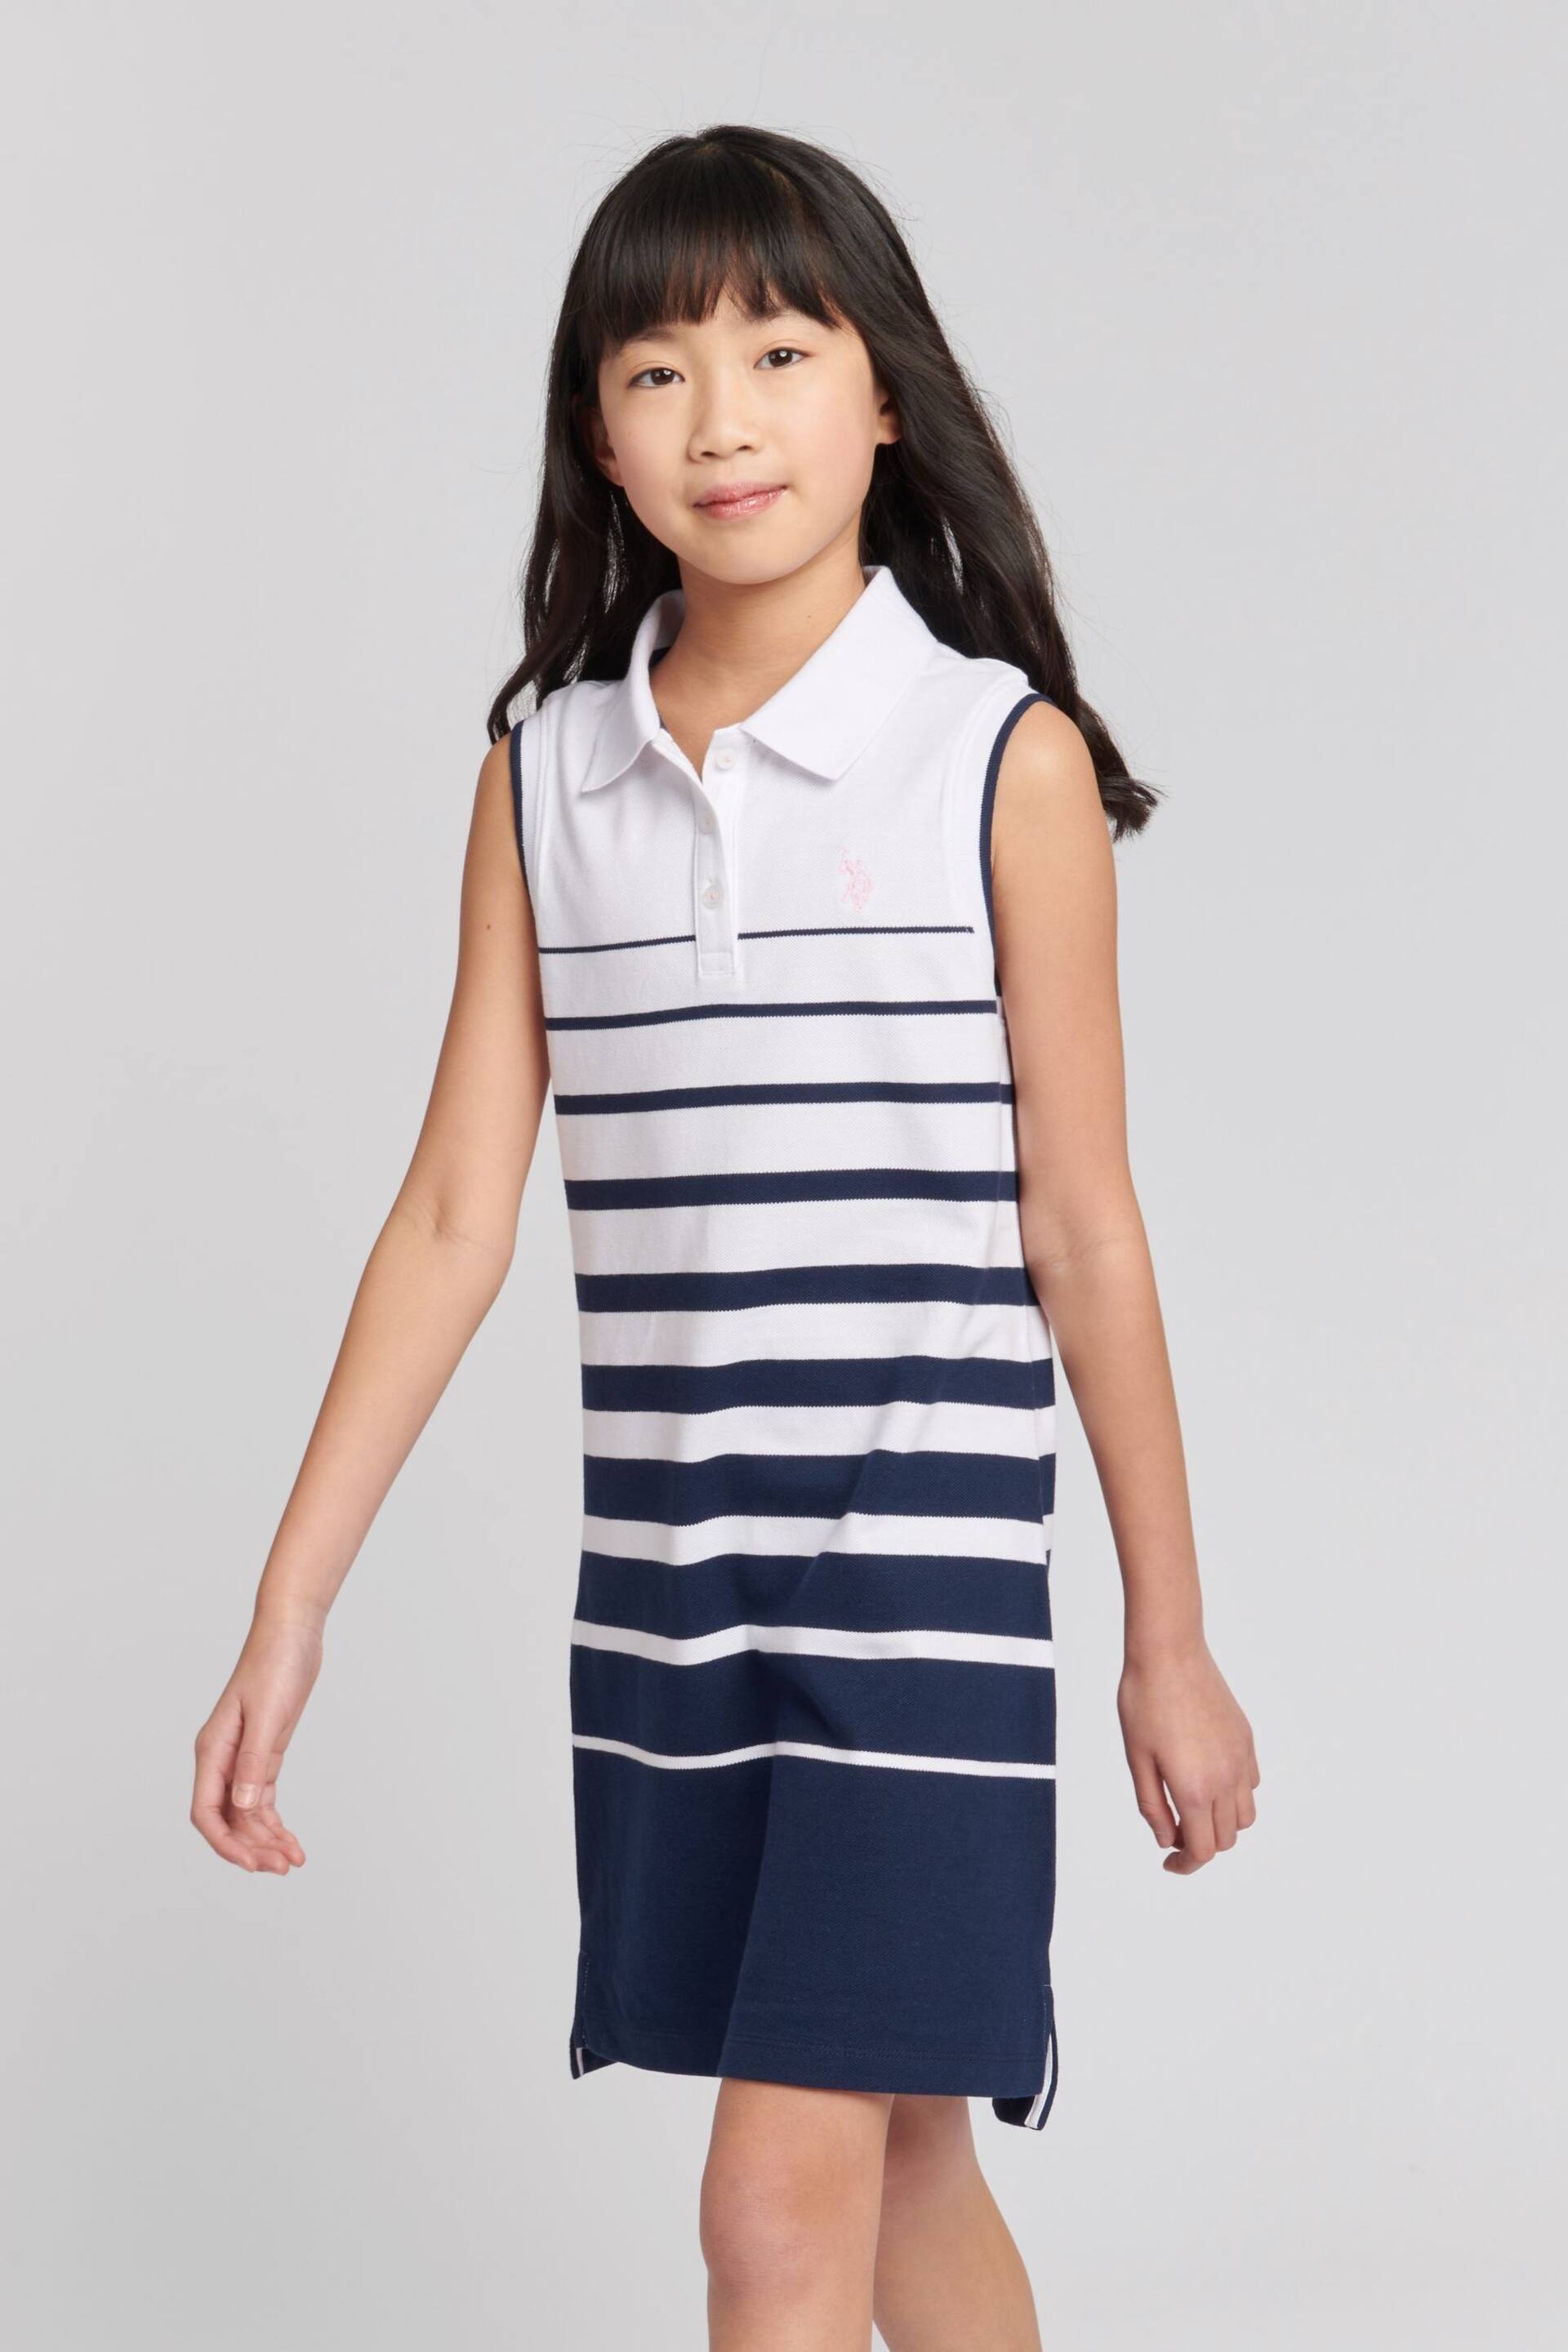 U.S. Polo Assn. Girls Blue Striped Sleeveless Polo Dress - Image 1 of 6